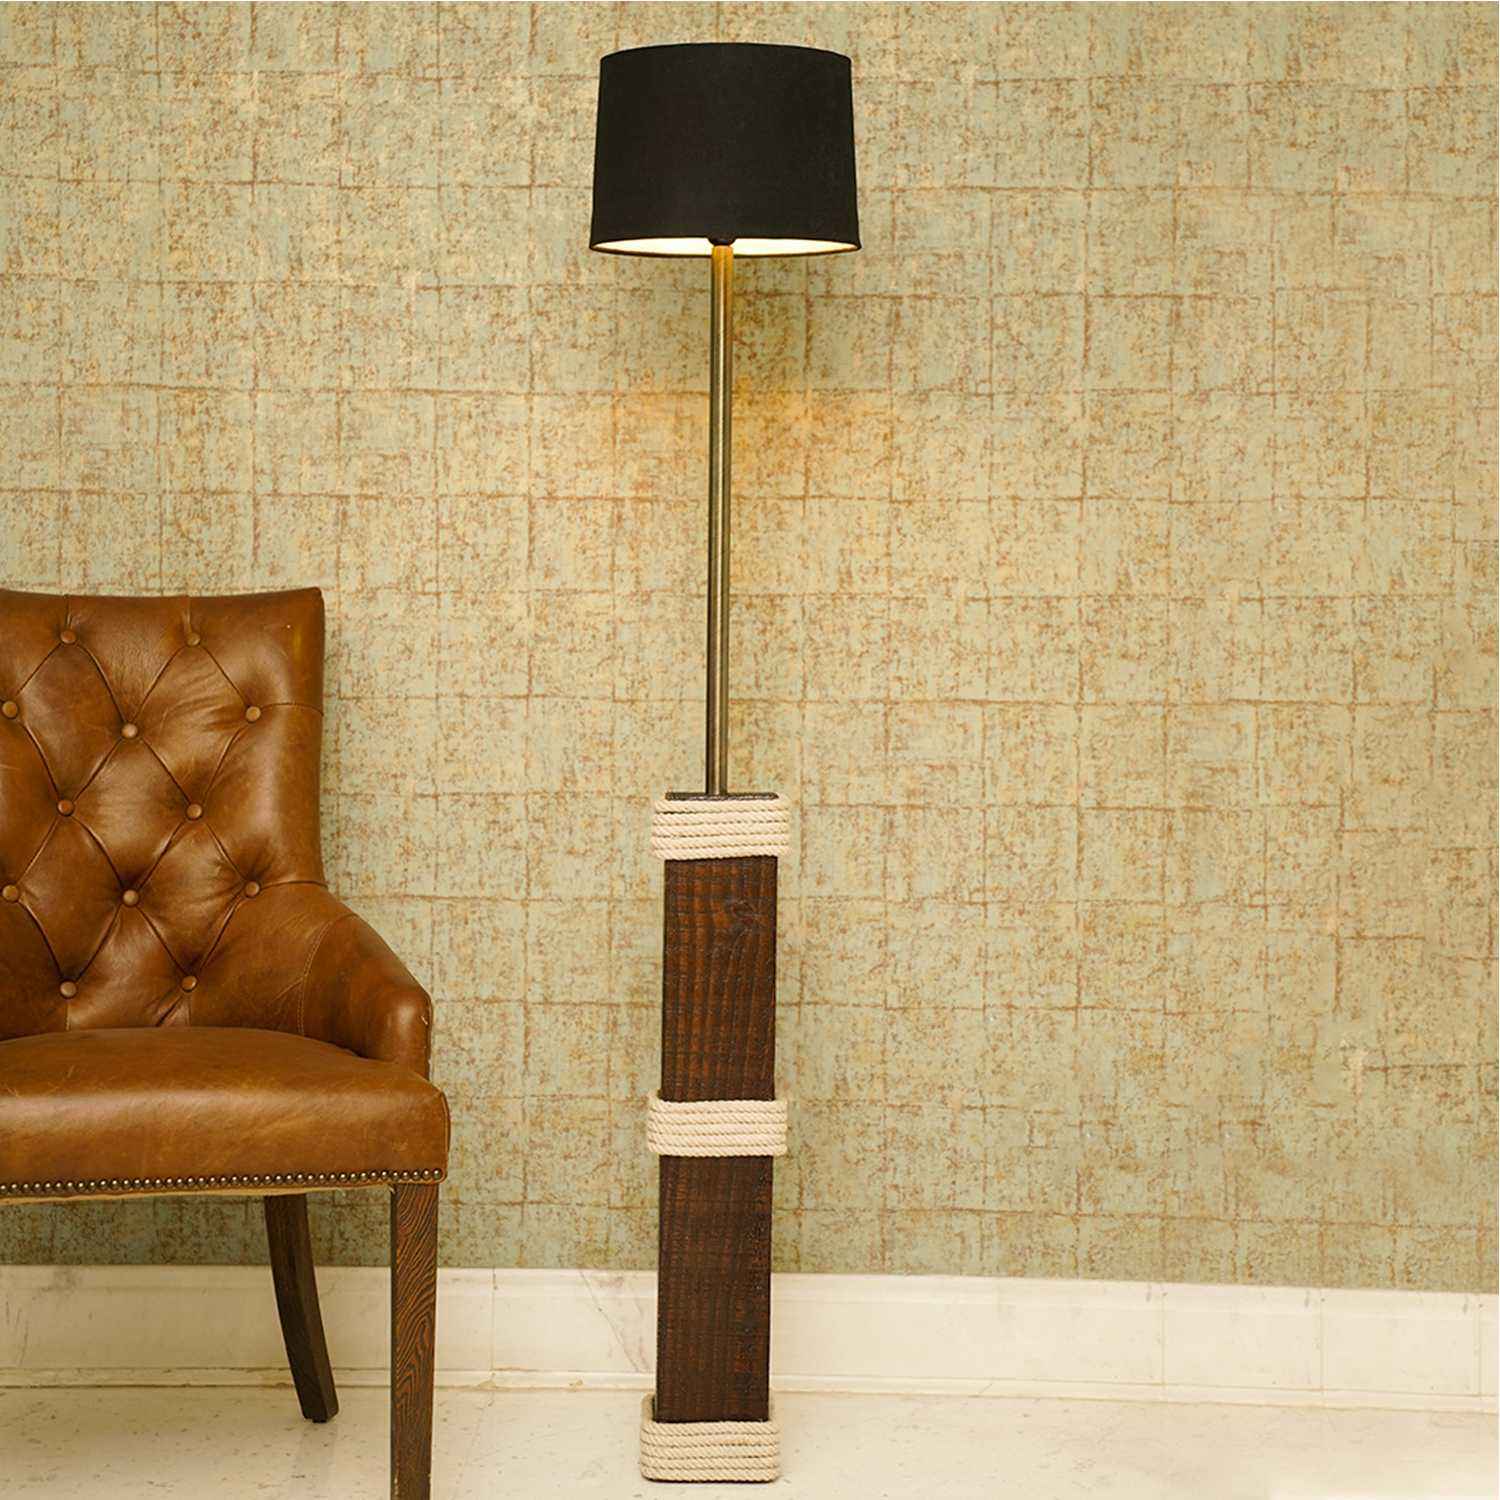 Wooden Standing Lamp